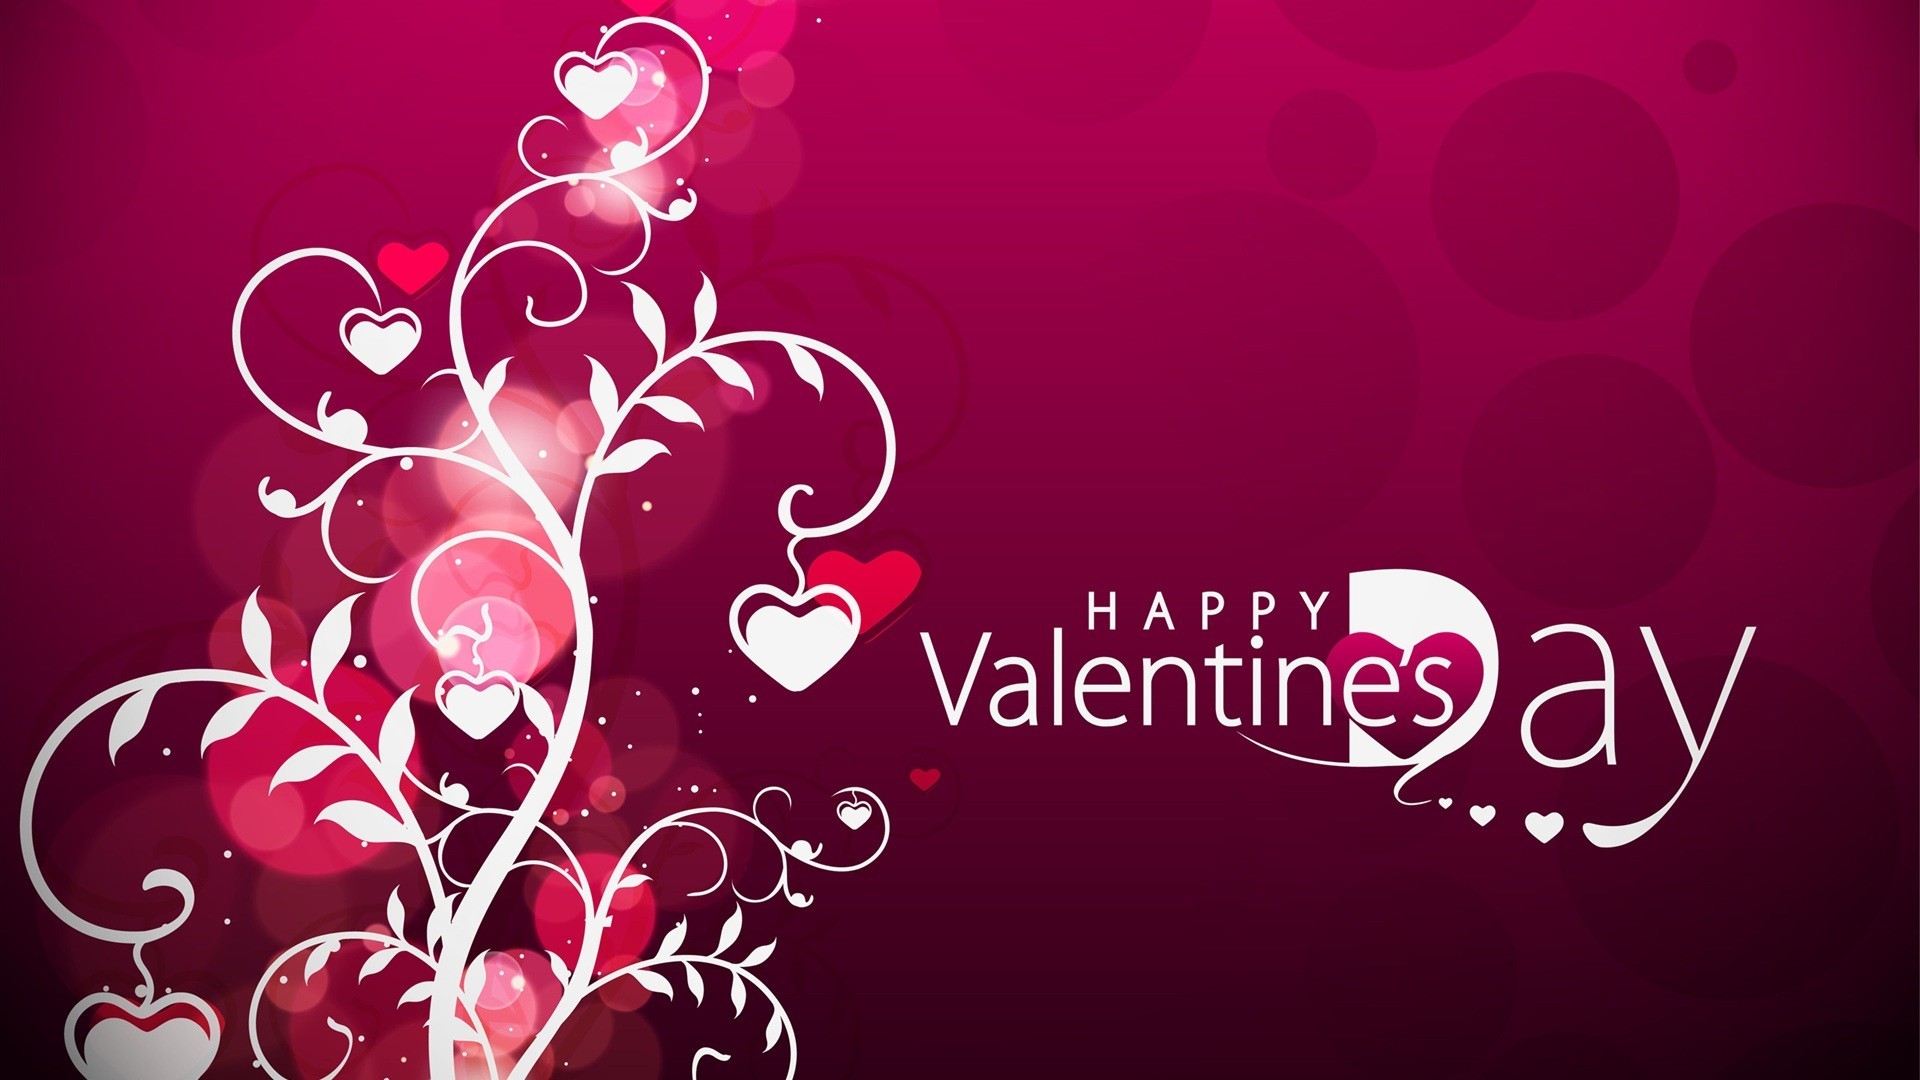 Happy Valentines Day HD Wallpaper 1920x1080